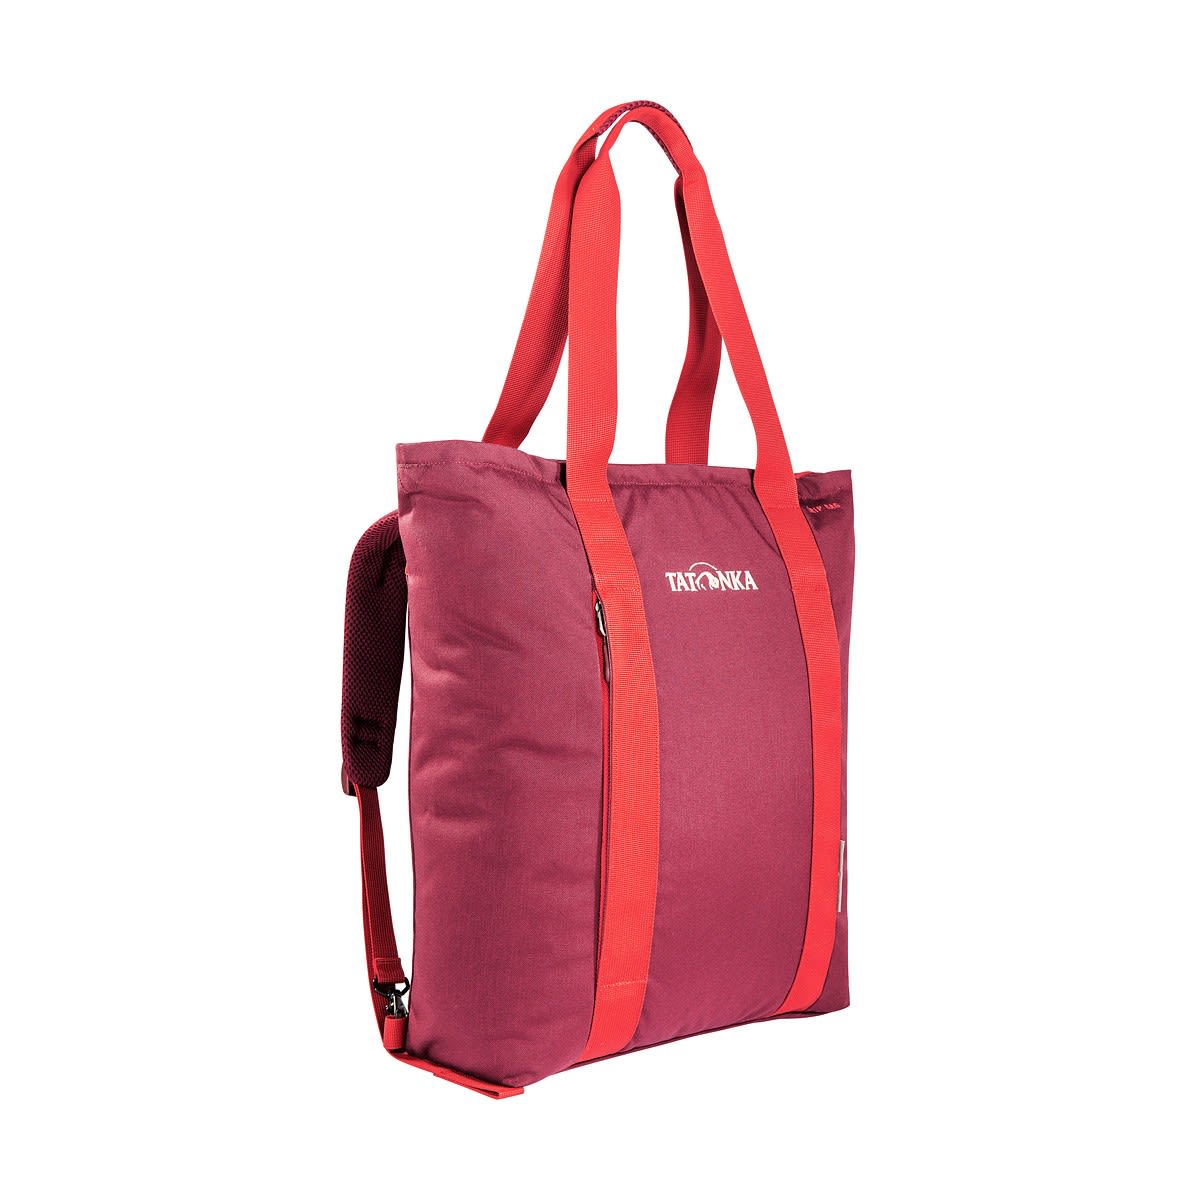 Tatonka Grip Bag Rot- Einkaufstaschen- Grsse 13l - Farbe Bordeaux Red